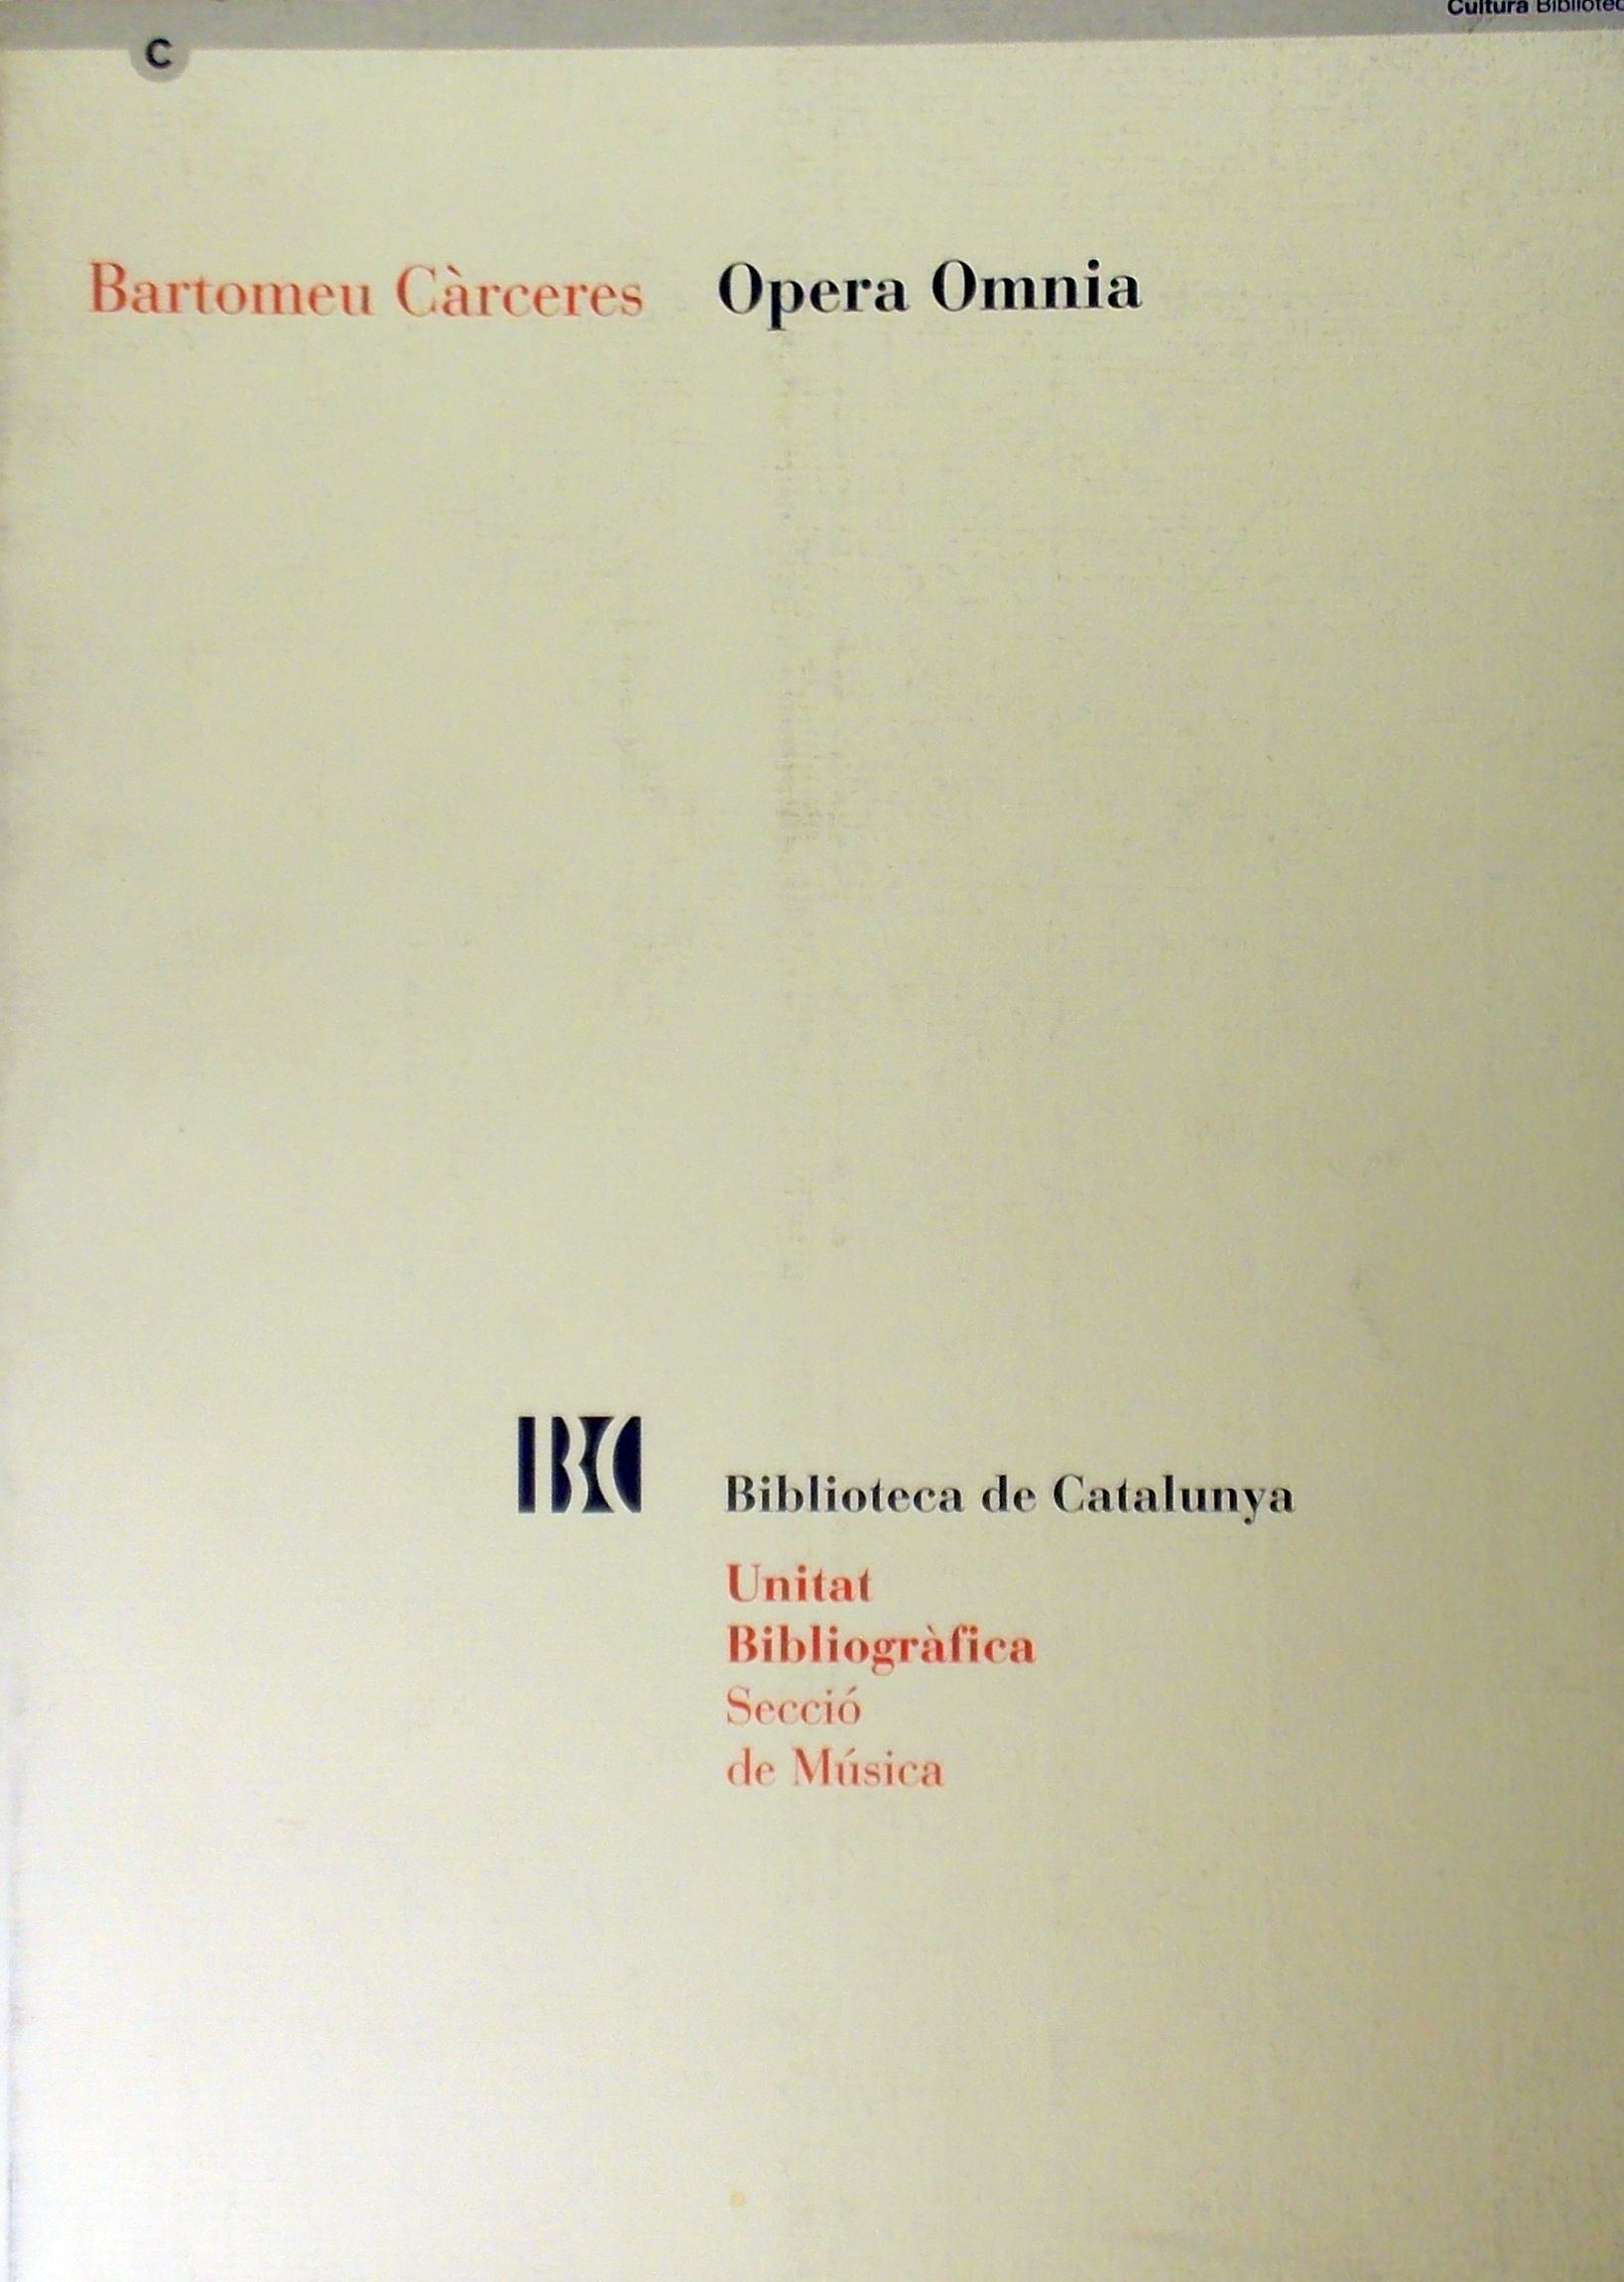 Opera omnia (Unitat Bibliografica, Seccio de Musica 43) - Carceres, Bartomeu (ed. Muntane, M.G.)